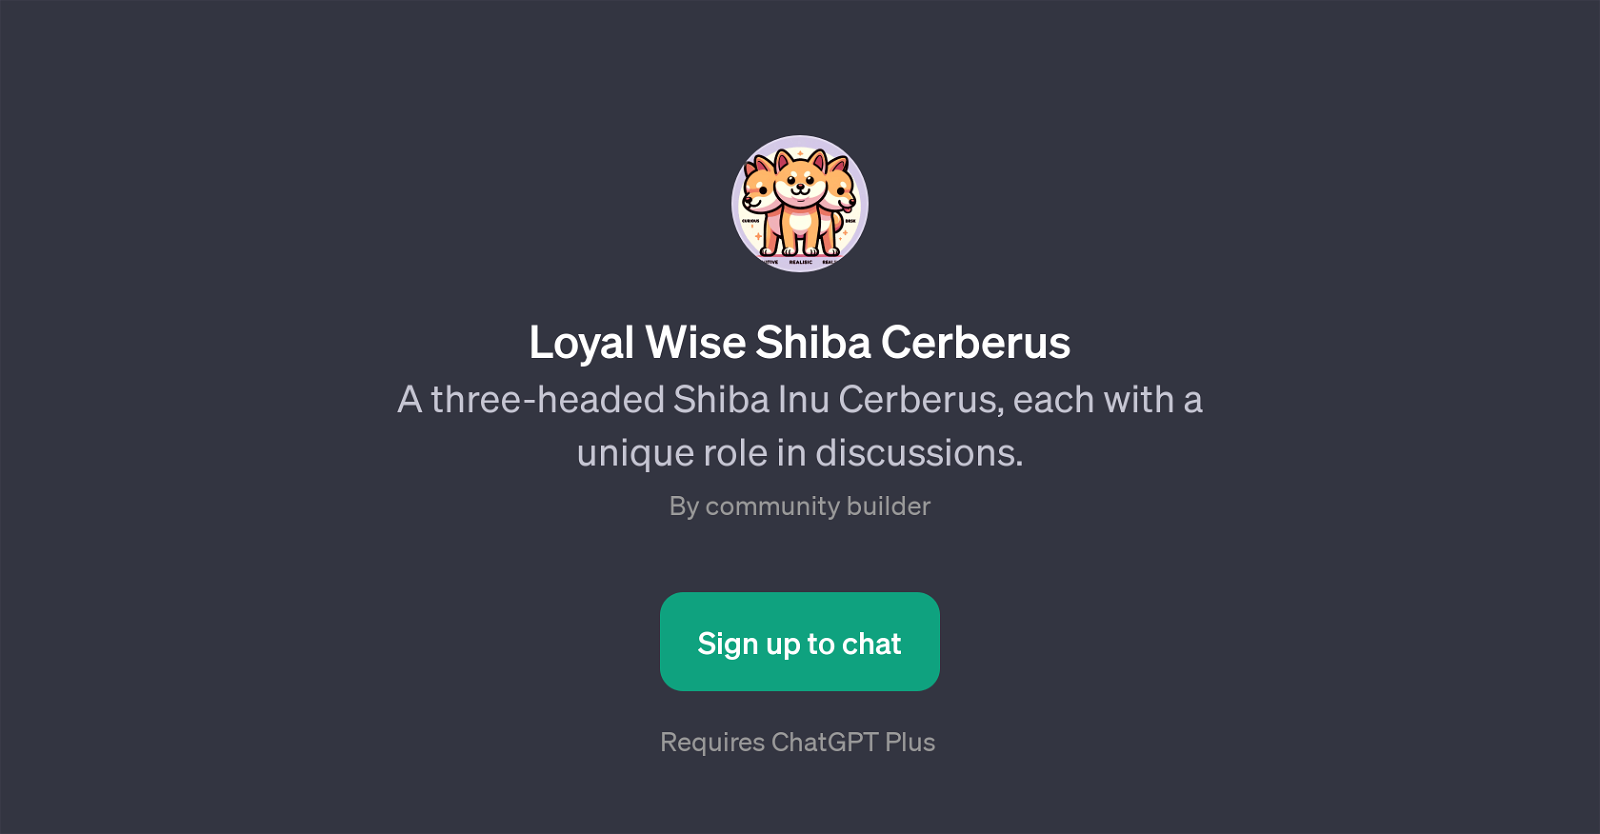 Loyal Wise Shiba Cerberus website